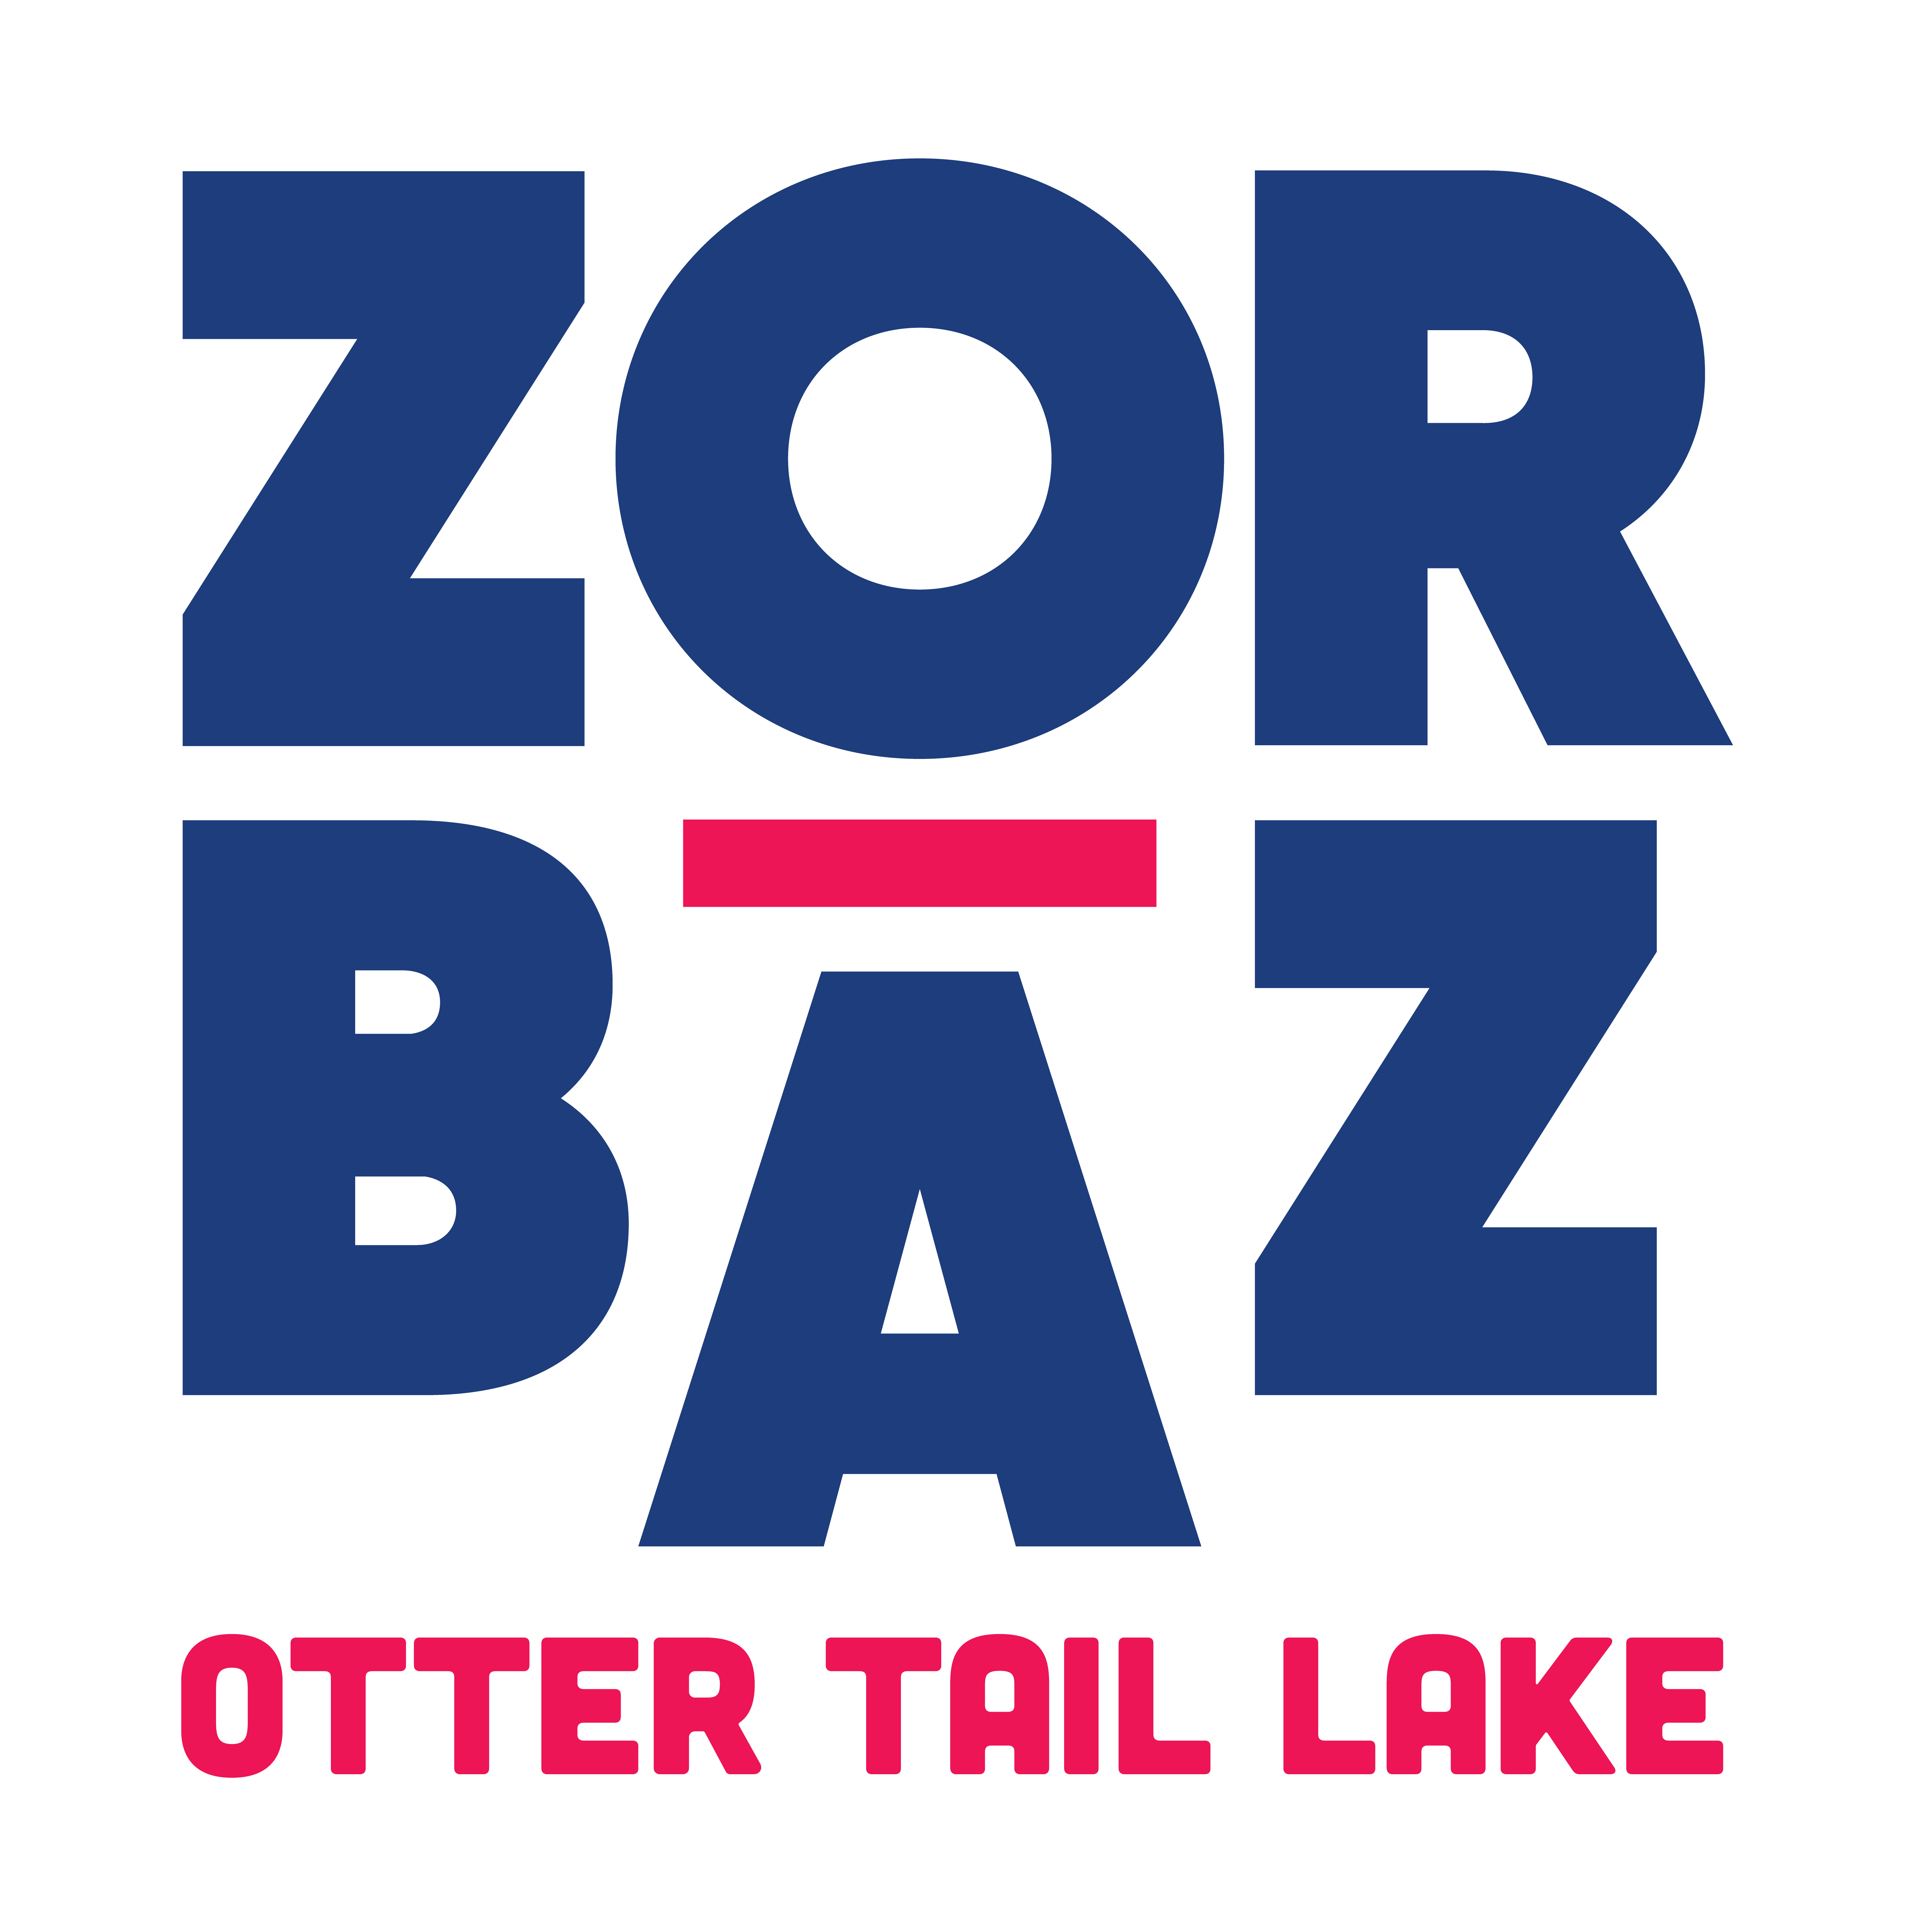 Zorbaz - Battle Lake, MN 56515 - (218)864-5979 | ShowMeLocal.com